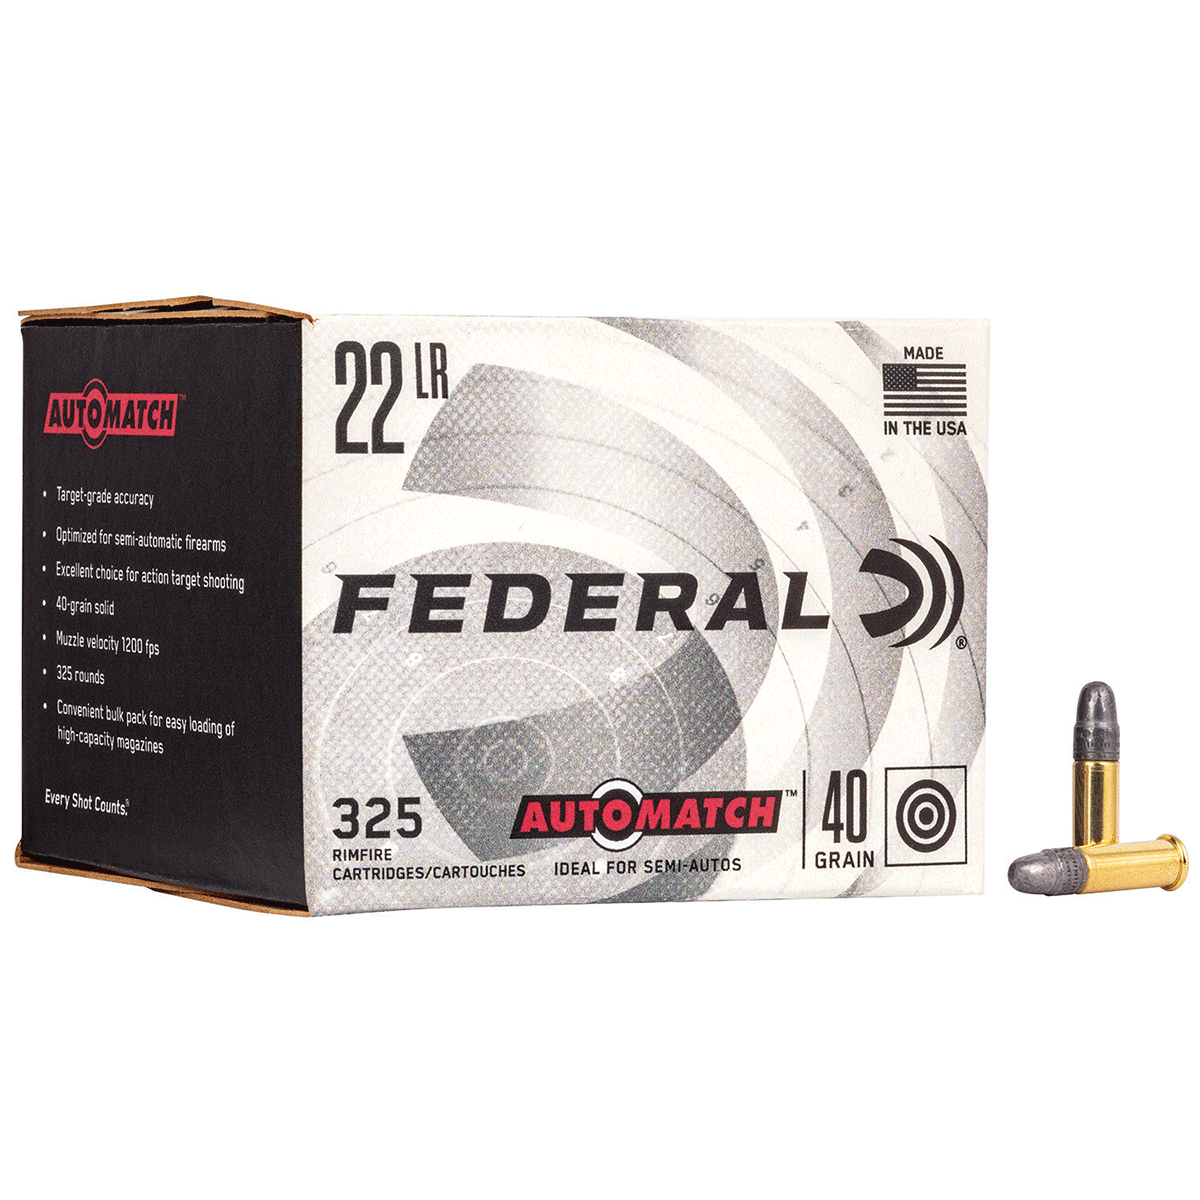 Federal Automatch .22 LR 325 Round Bulk Pack